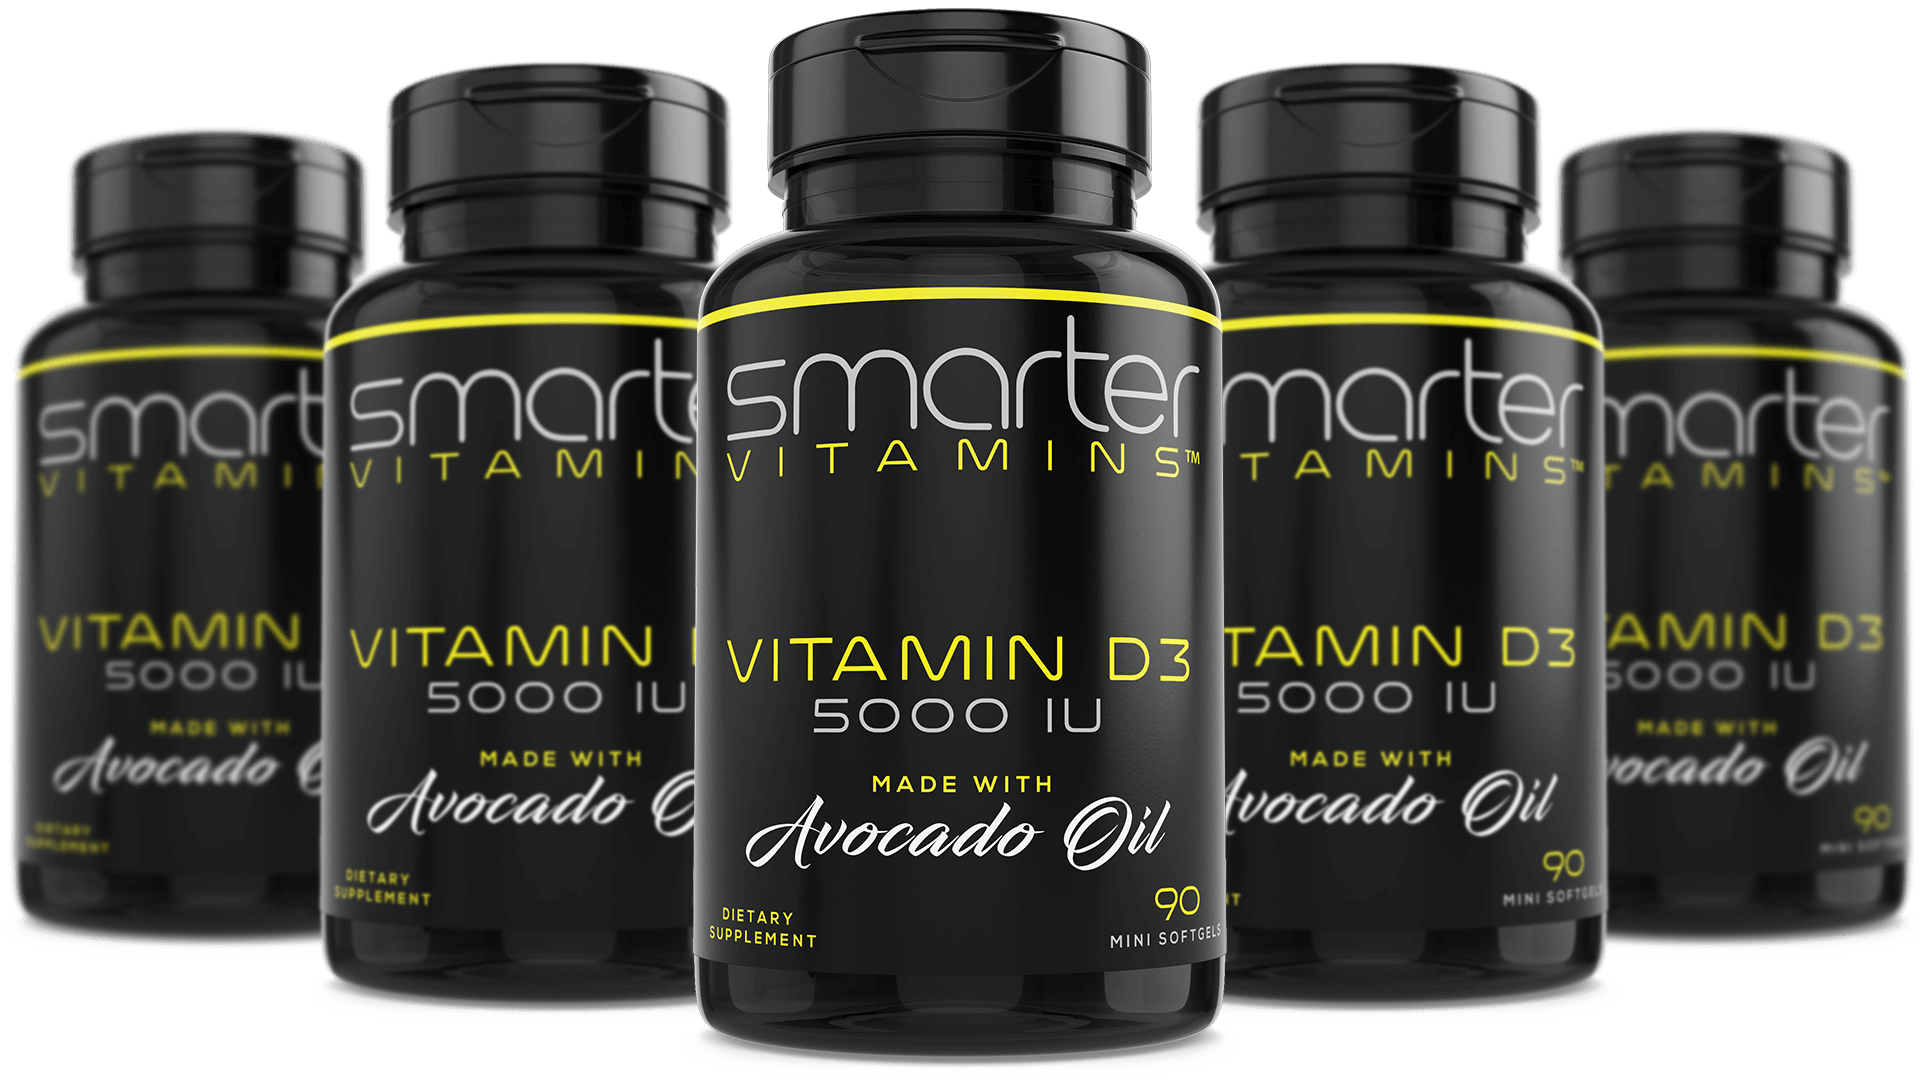 5 bottles of Vitamin D3. 15 month supply.